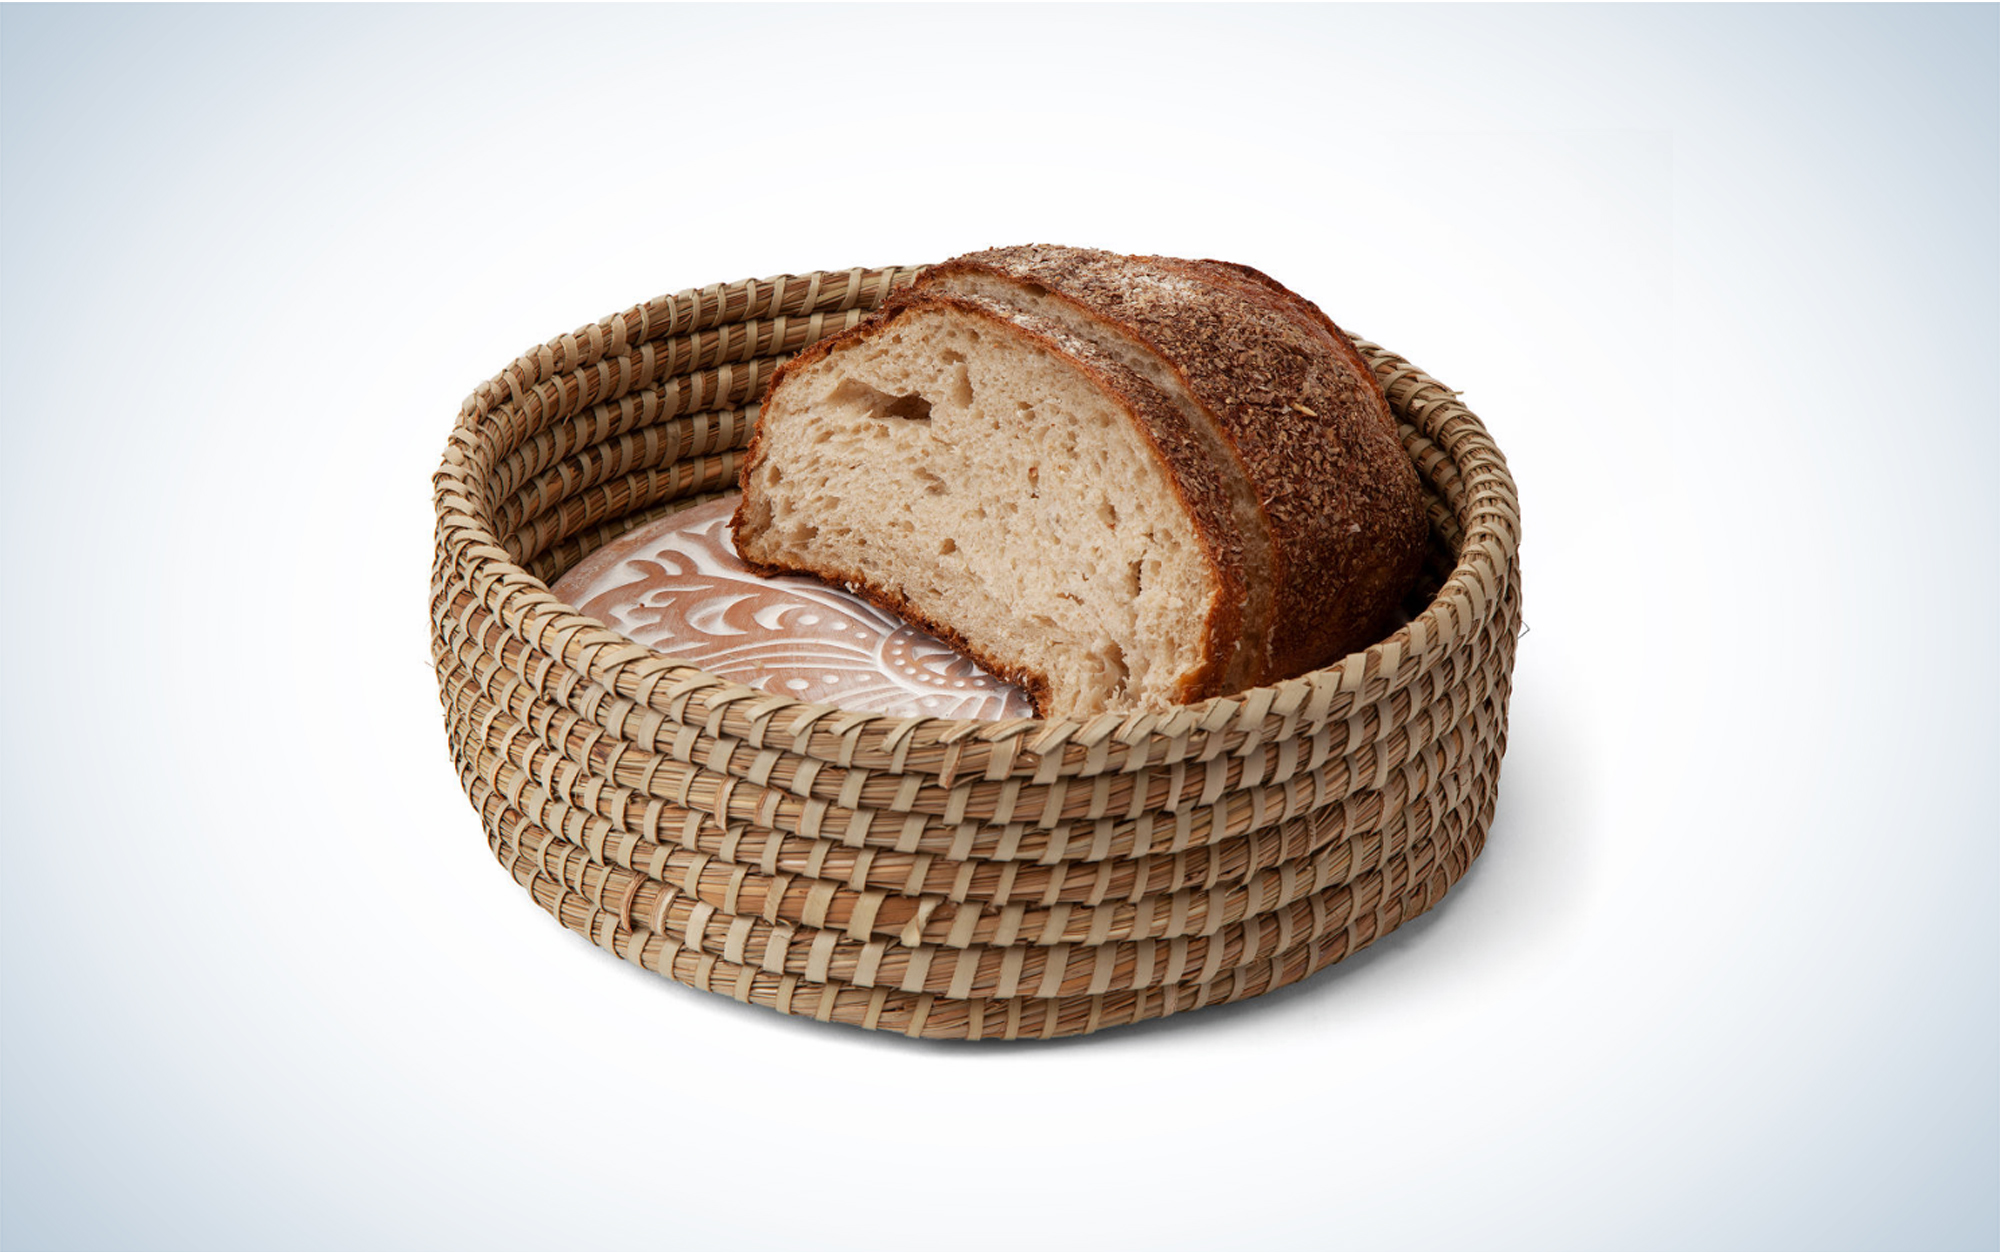 Traditional Bread Warming Set